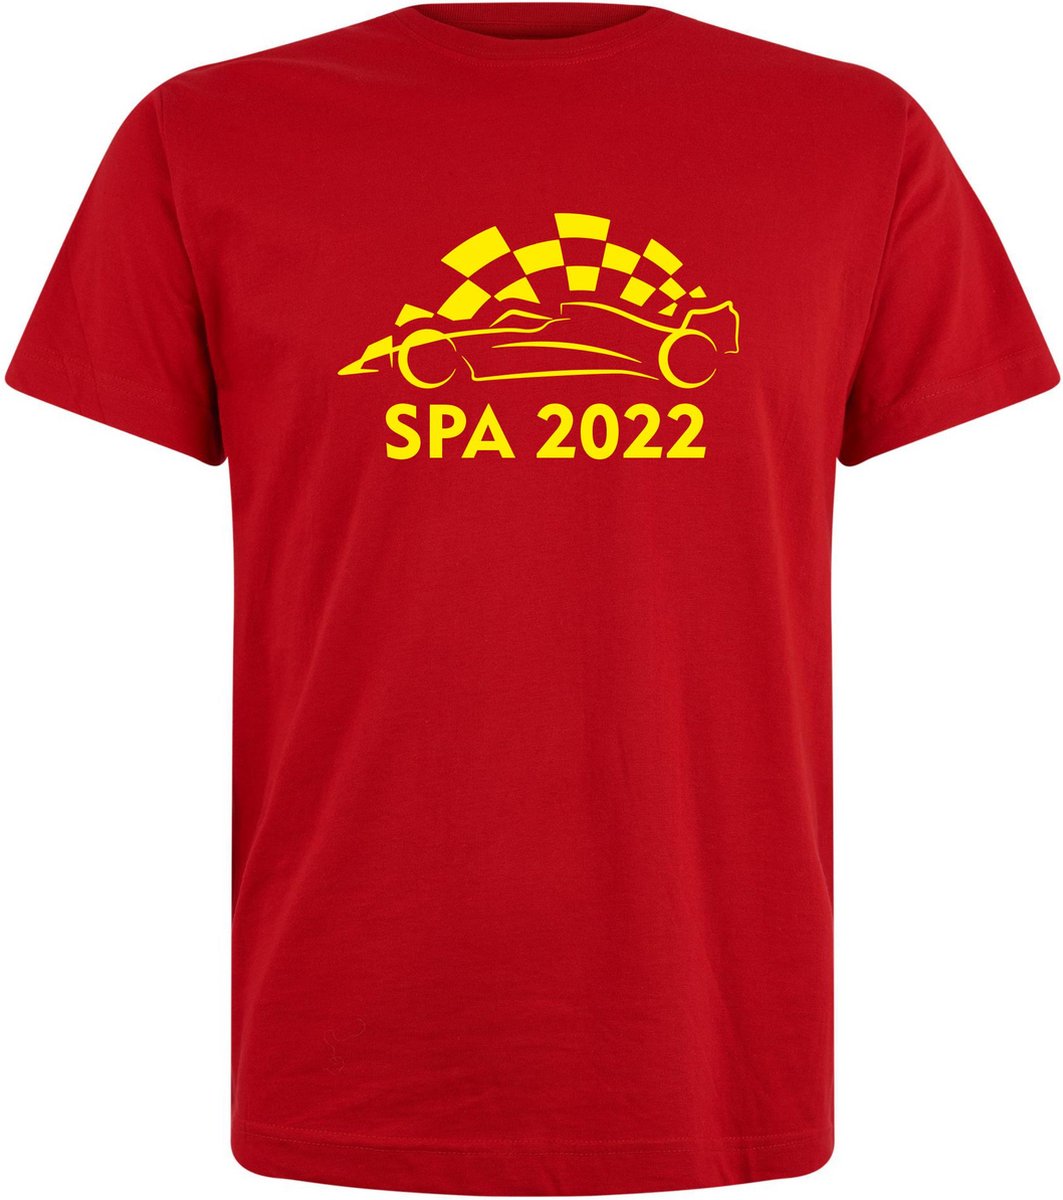 T-shirt kinderen Spa 2022 met raceauto | Max Verstappen / Red Bull Racing / Formule 1 fan | Grand Prix Circuit Spa-Francorchamps | kleding shirt | Rood | maat 80